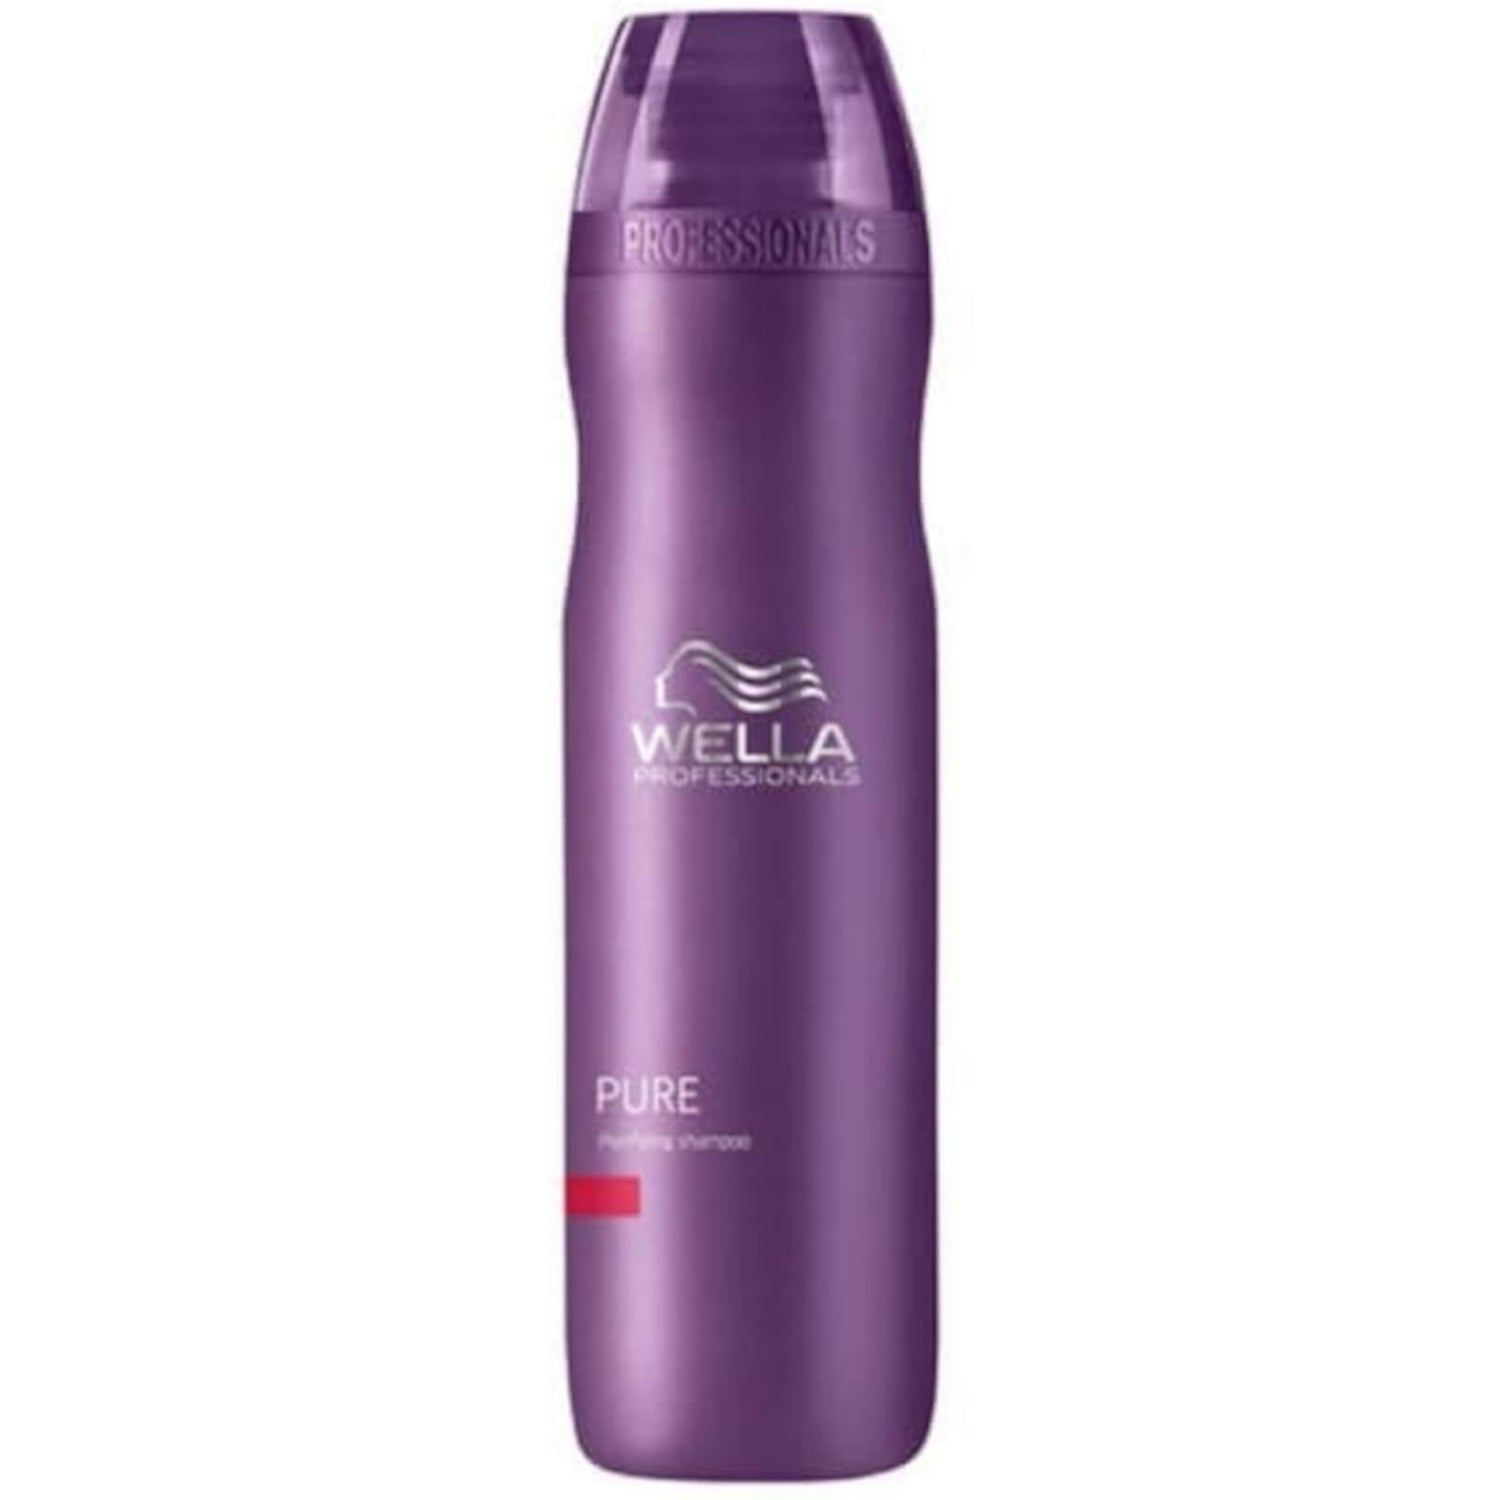 Wella Professionals Pure Purifying Shampoo (250 ml)